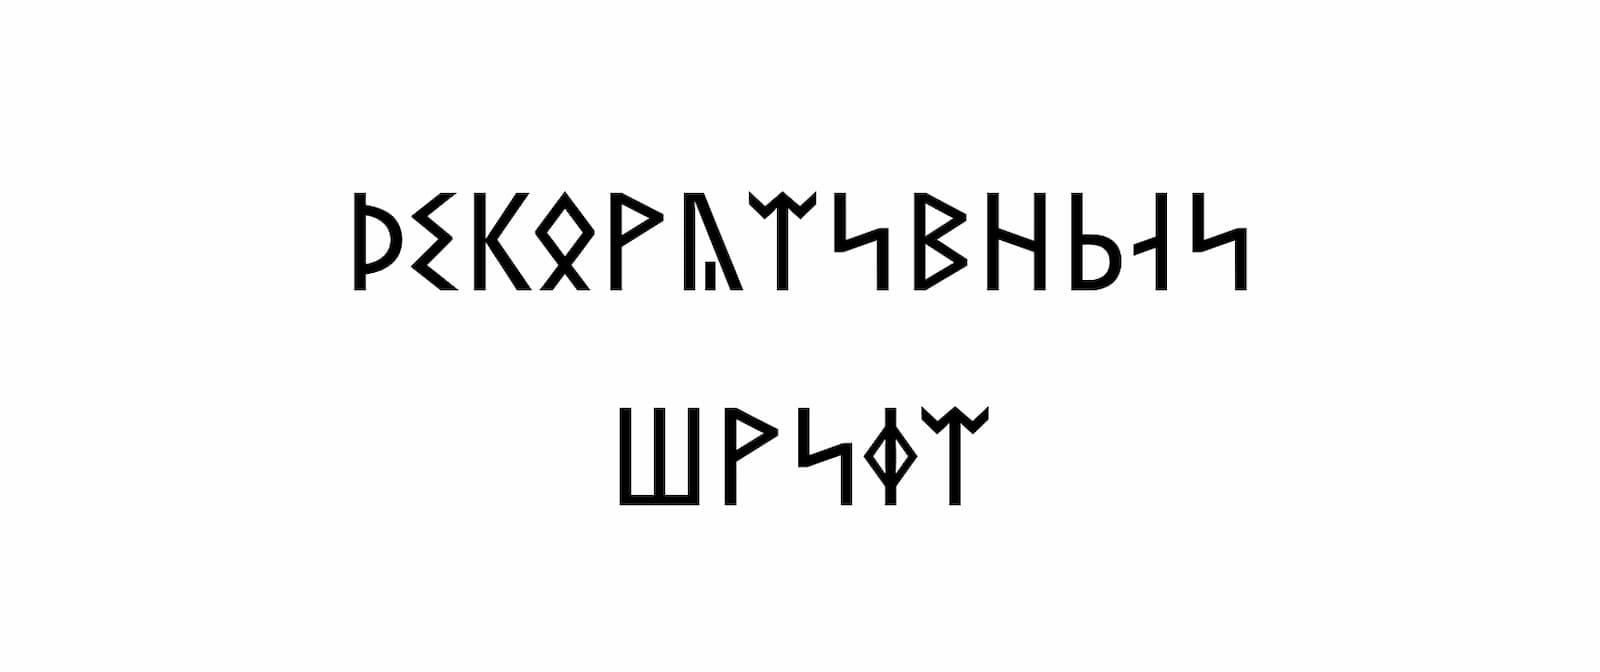 Пример декоративного шрифта — шрифт Segoe UI Historic